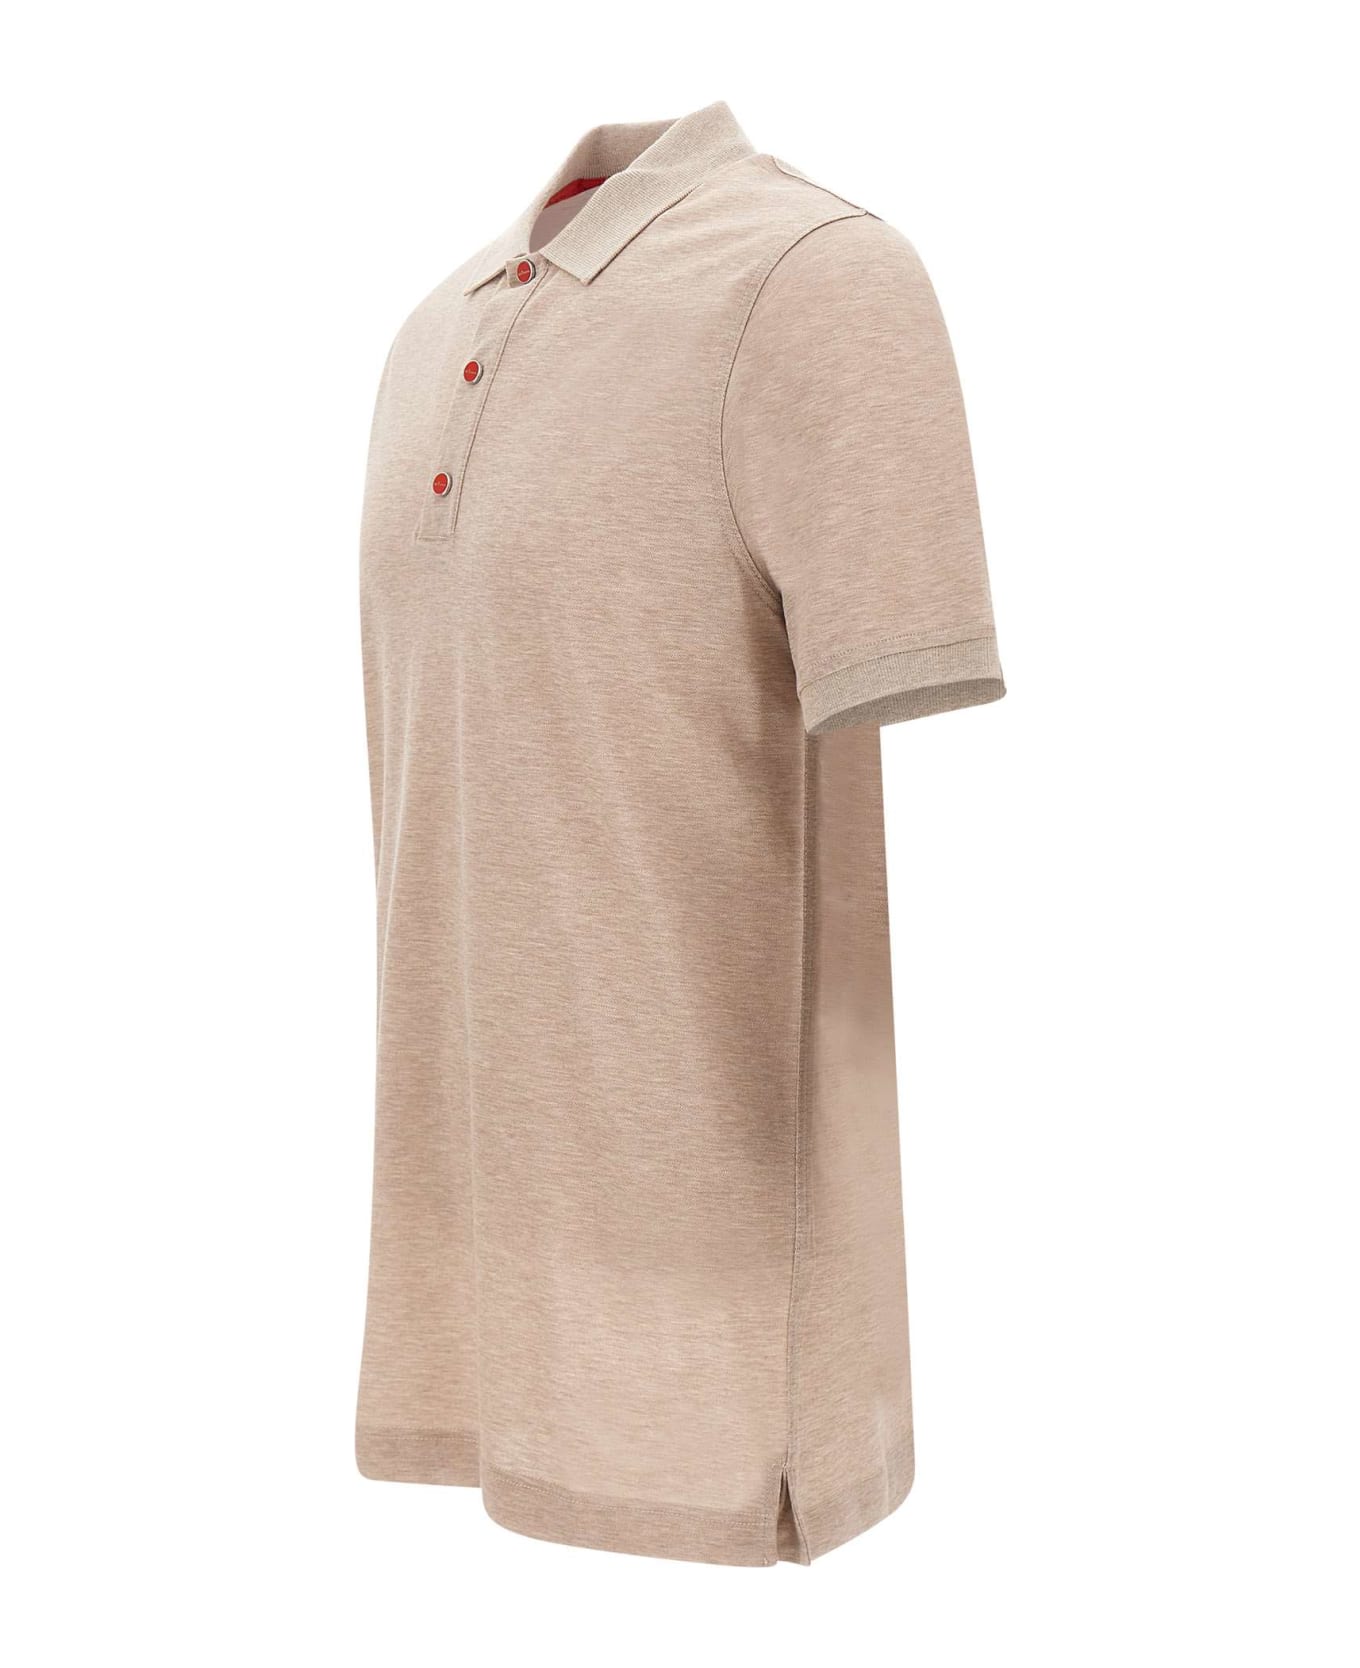 Kiton Cotton Polo Shirt - BEIGE ポロシャツ